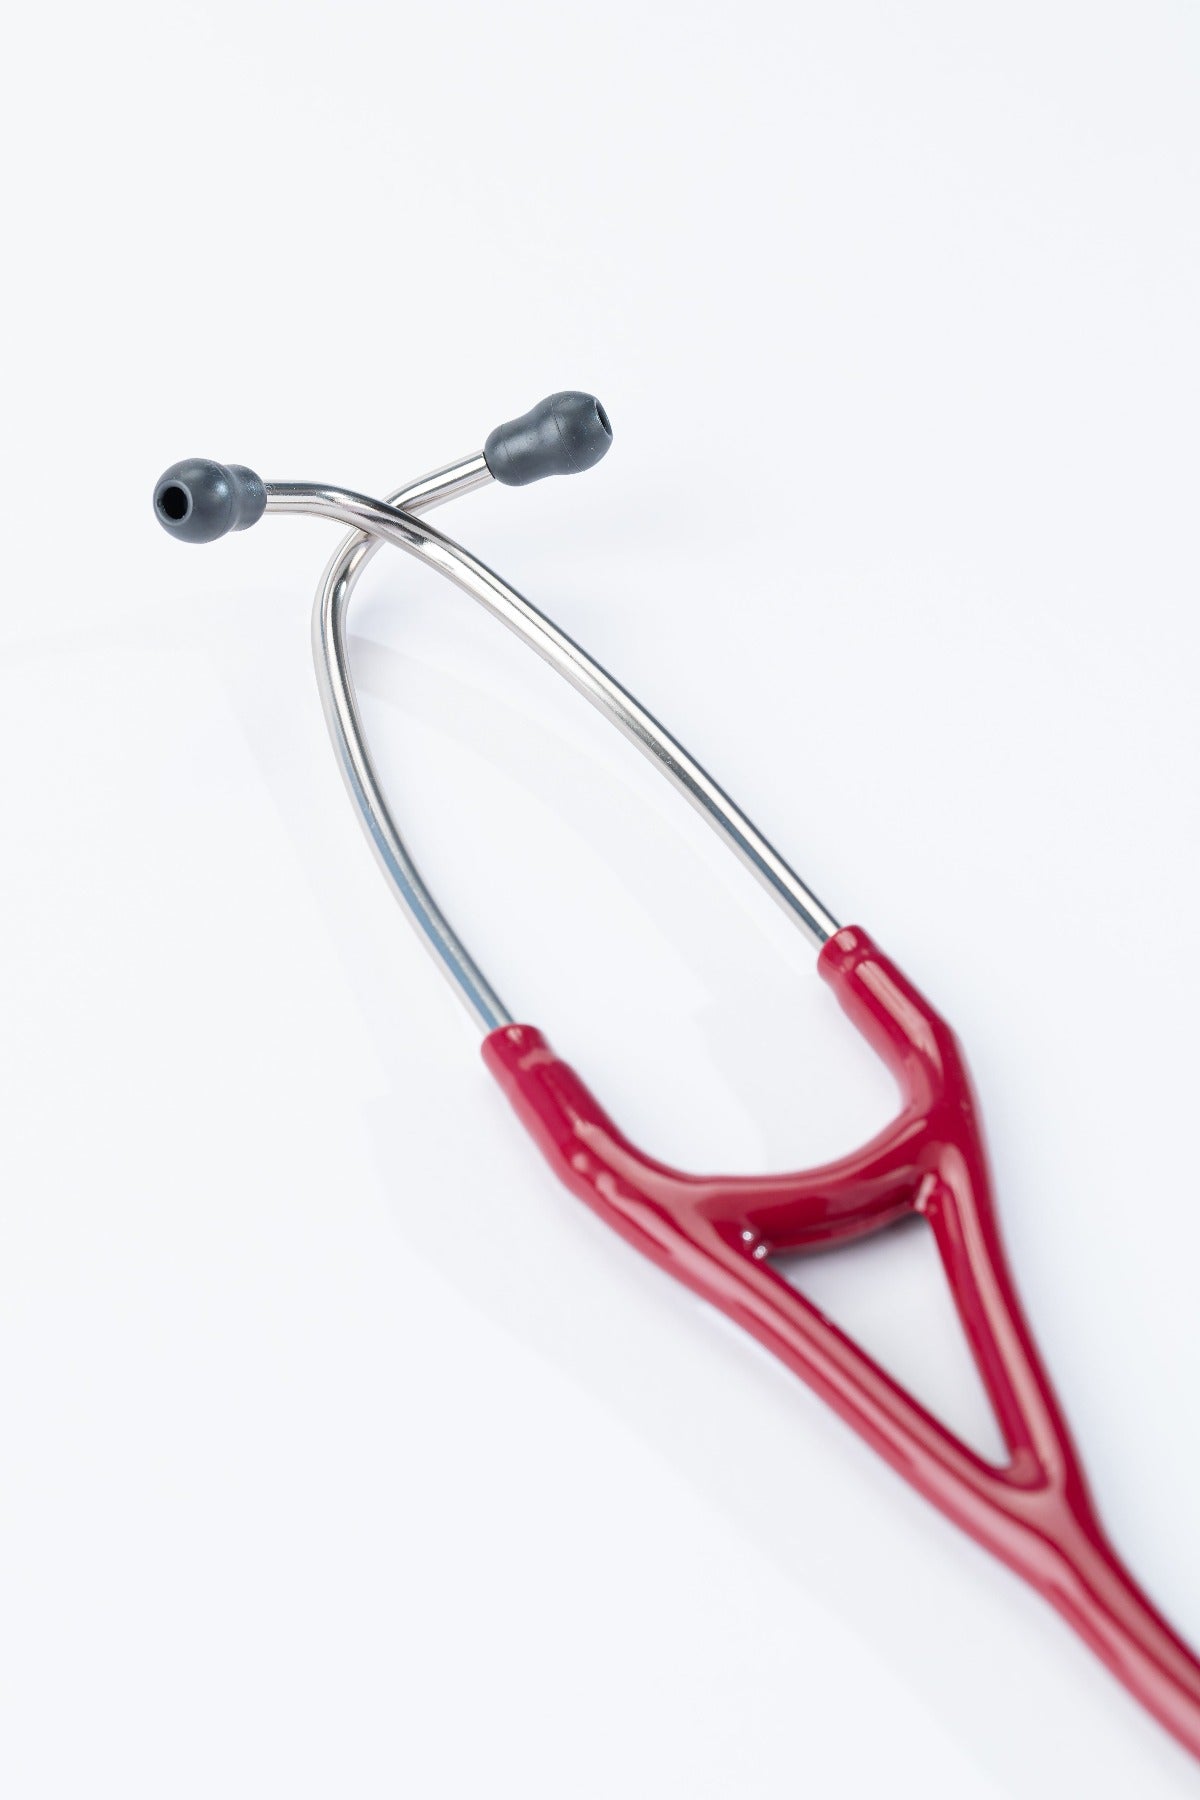 Burgundy ( red ) color Littmann IV Cardiology Stethoscope